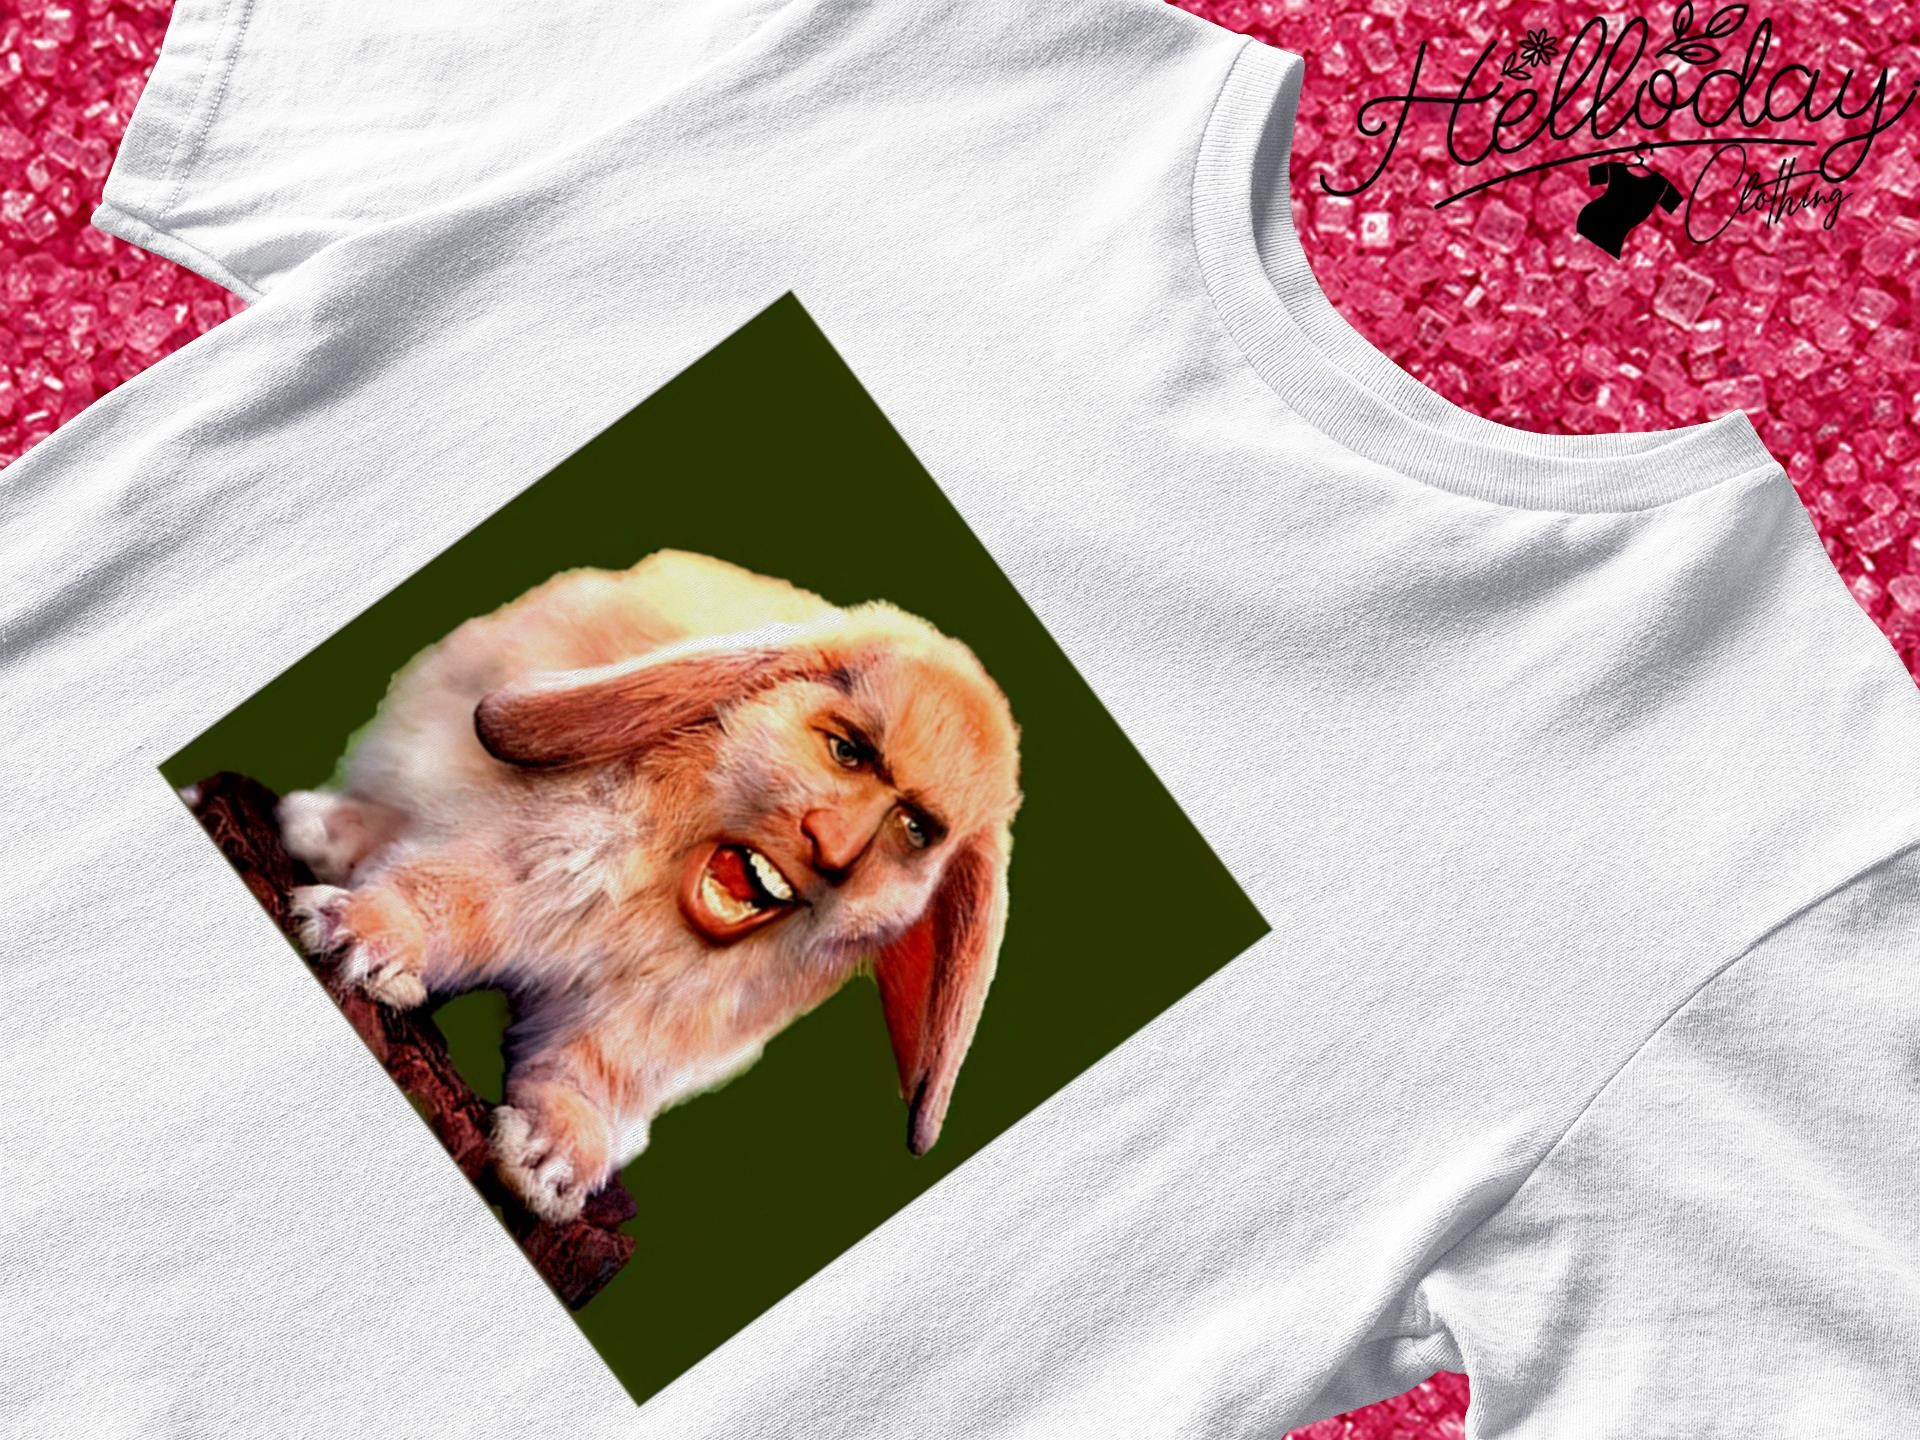 Nicolas Cage Bunny meme shirt